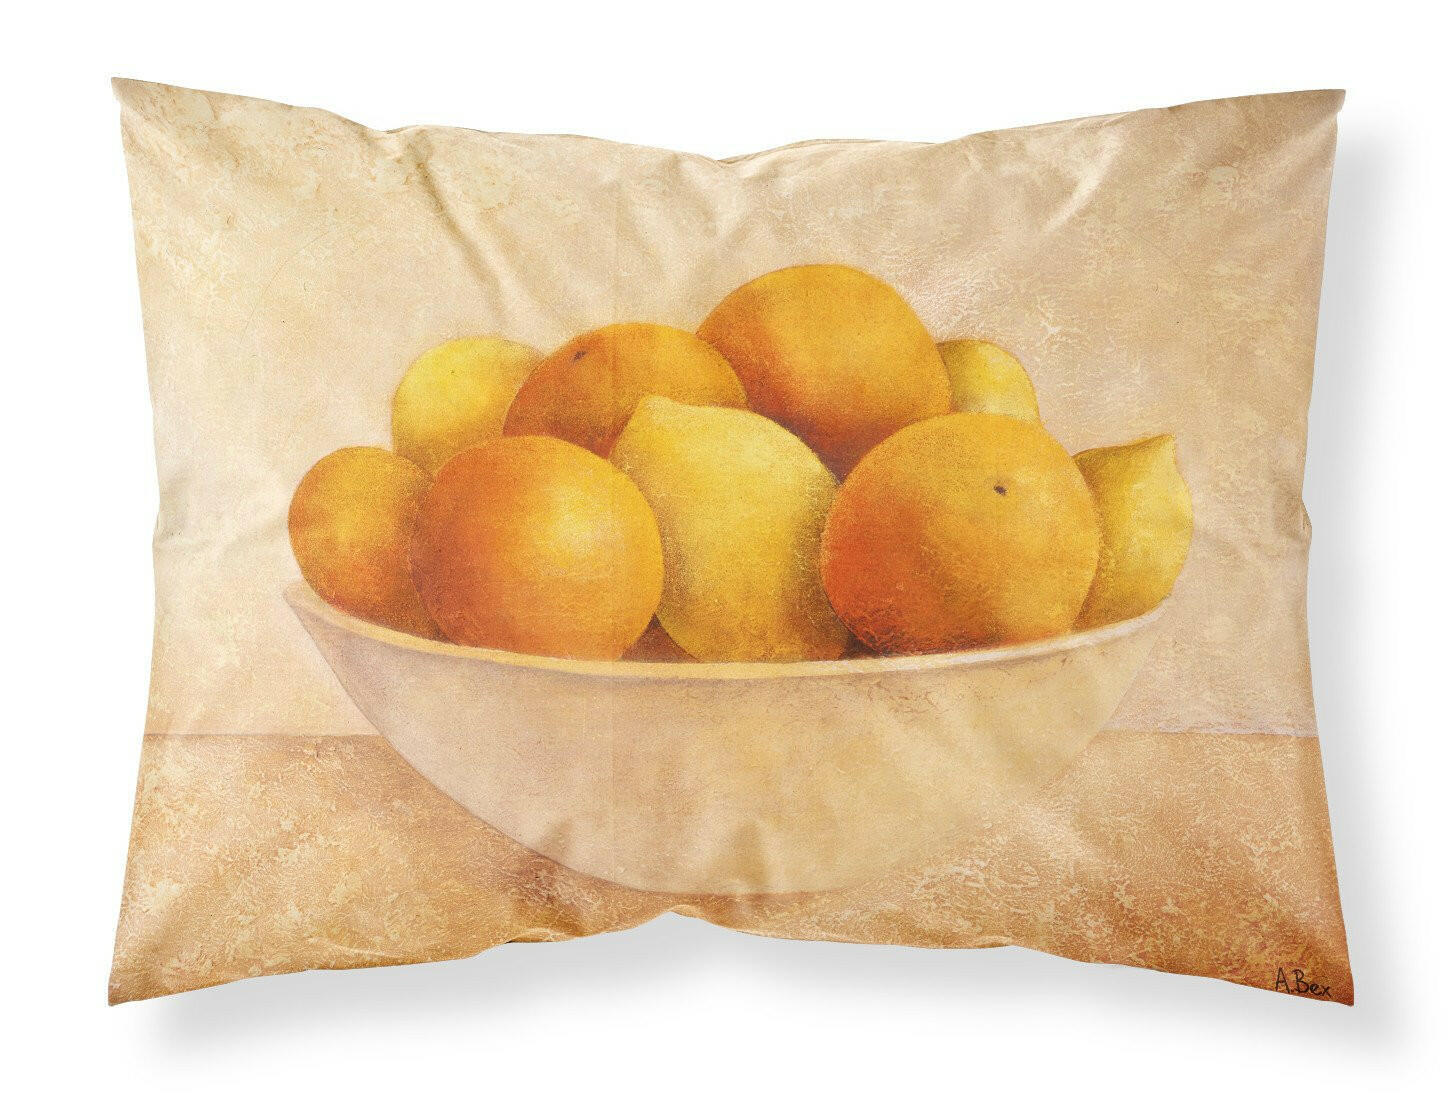 Oranges & Lemons in a Bowl Fabric Standard Pillowcase BABE0085PILLOWCASE by Caroline's Treasures